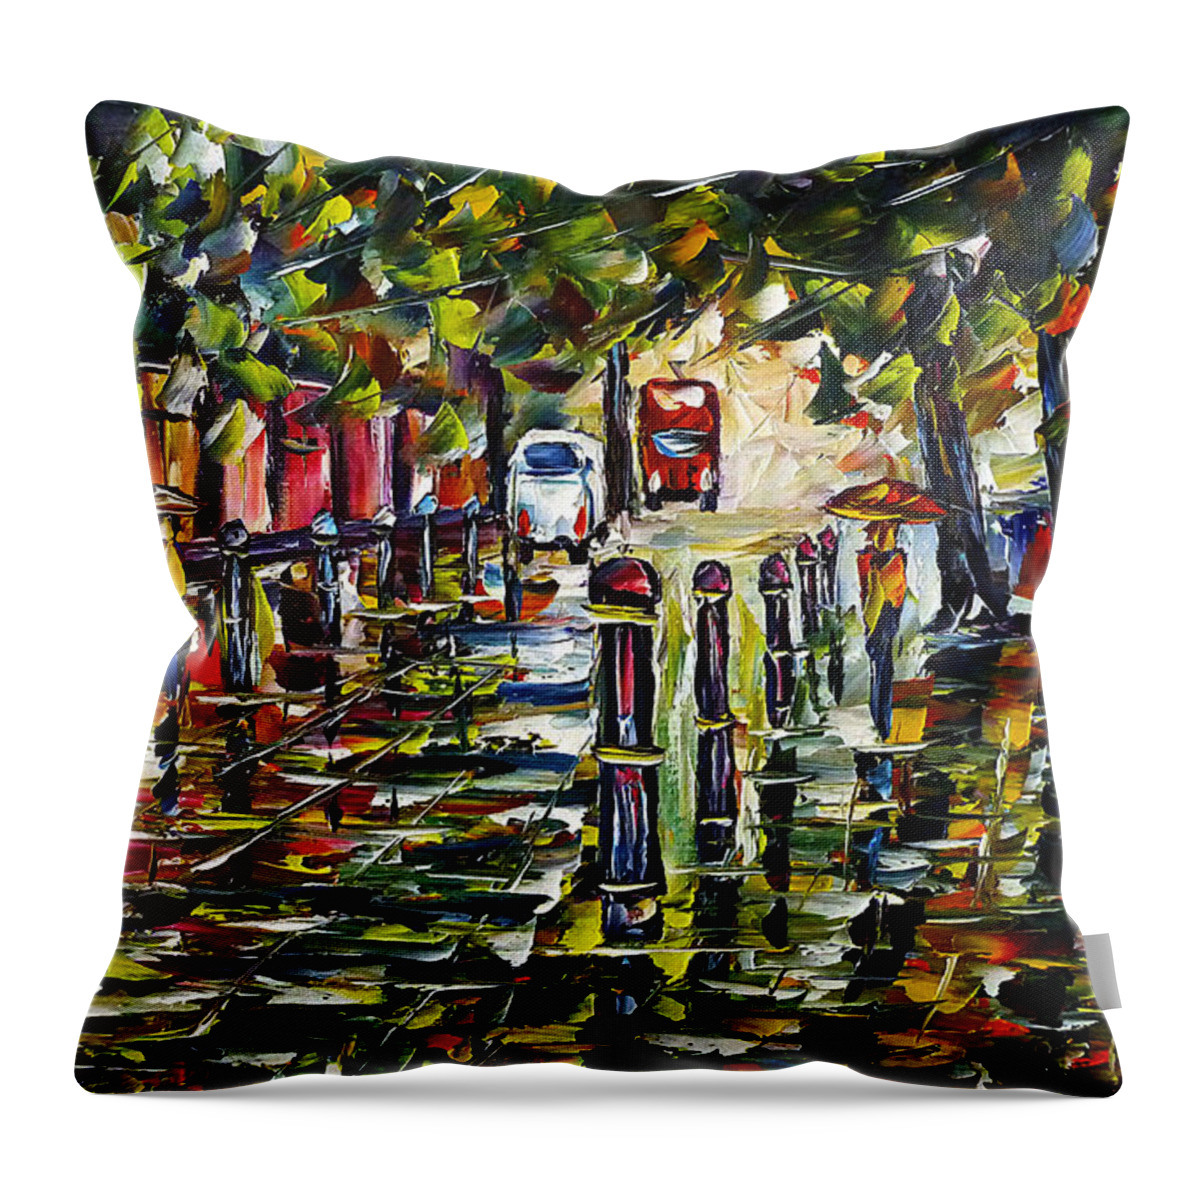 Rainy Cityscape Throw Pillow featuring the painting City In The Rain by Mirek Kuzniar